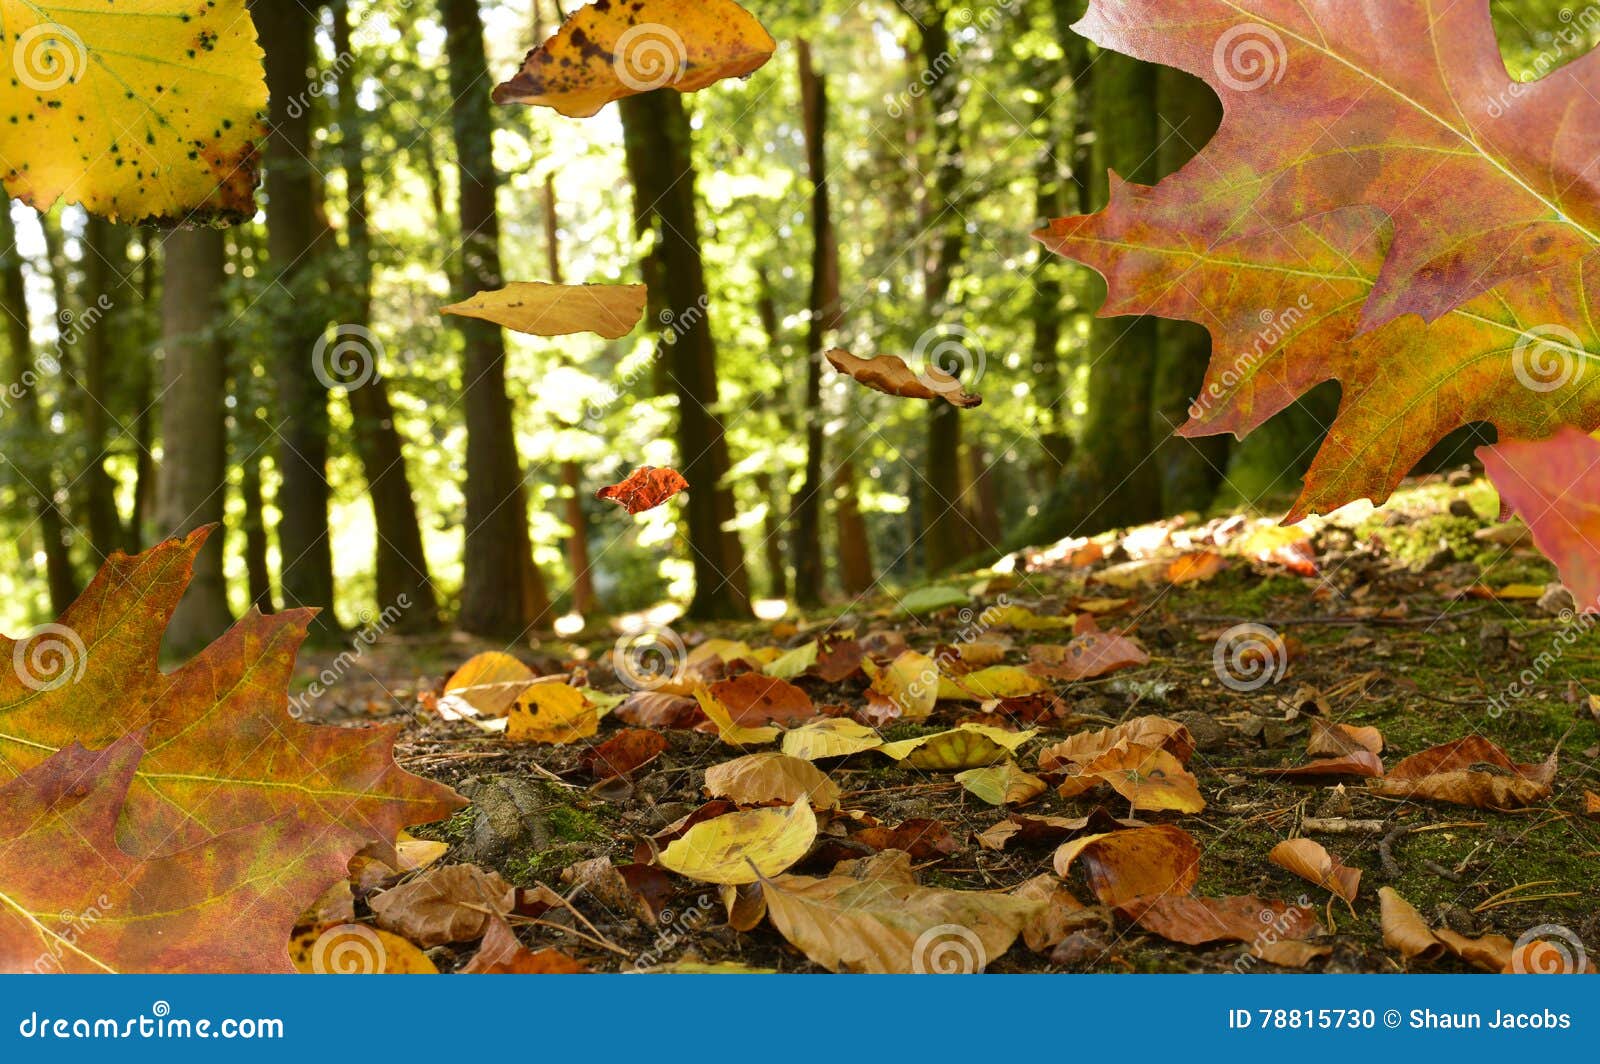 Falling autumn leaves stock photo. Image of flora, background - 78815730